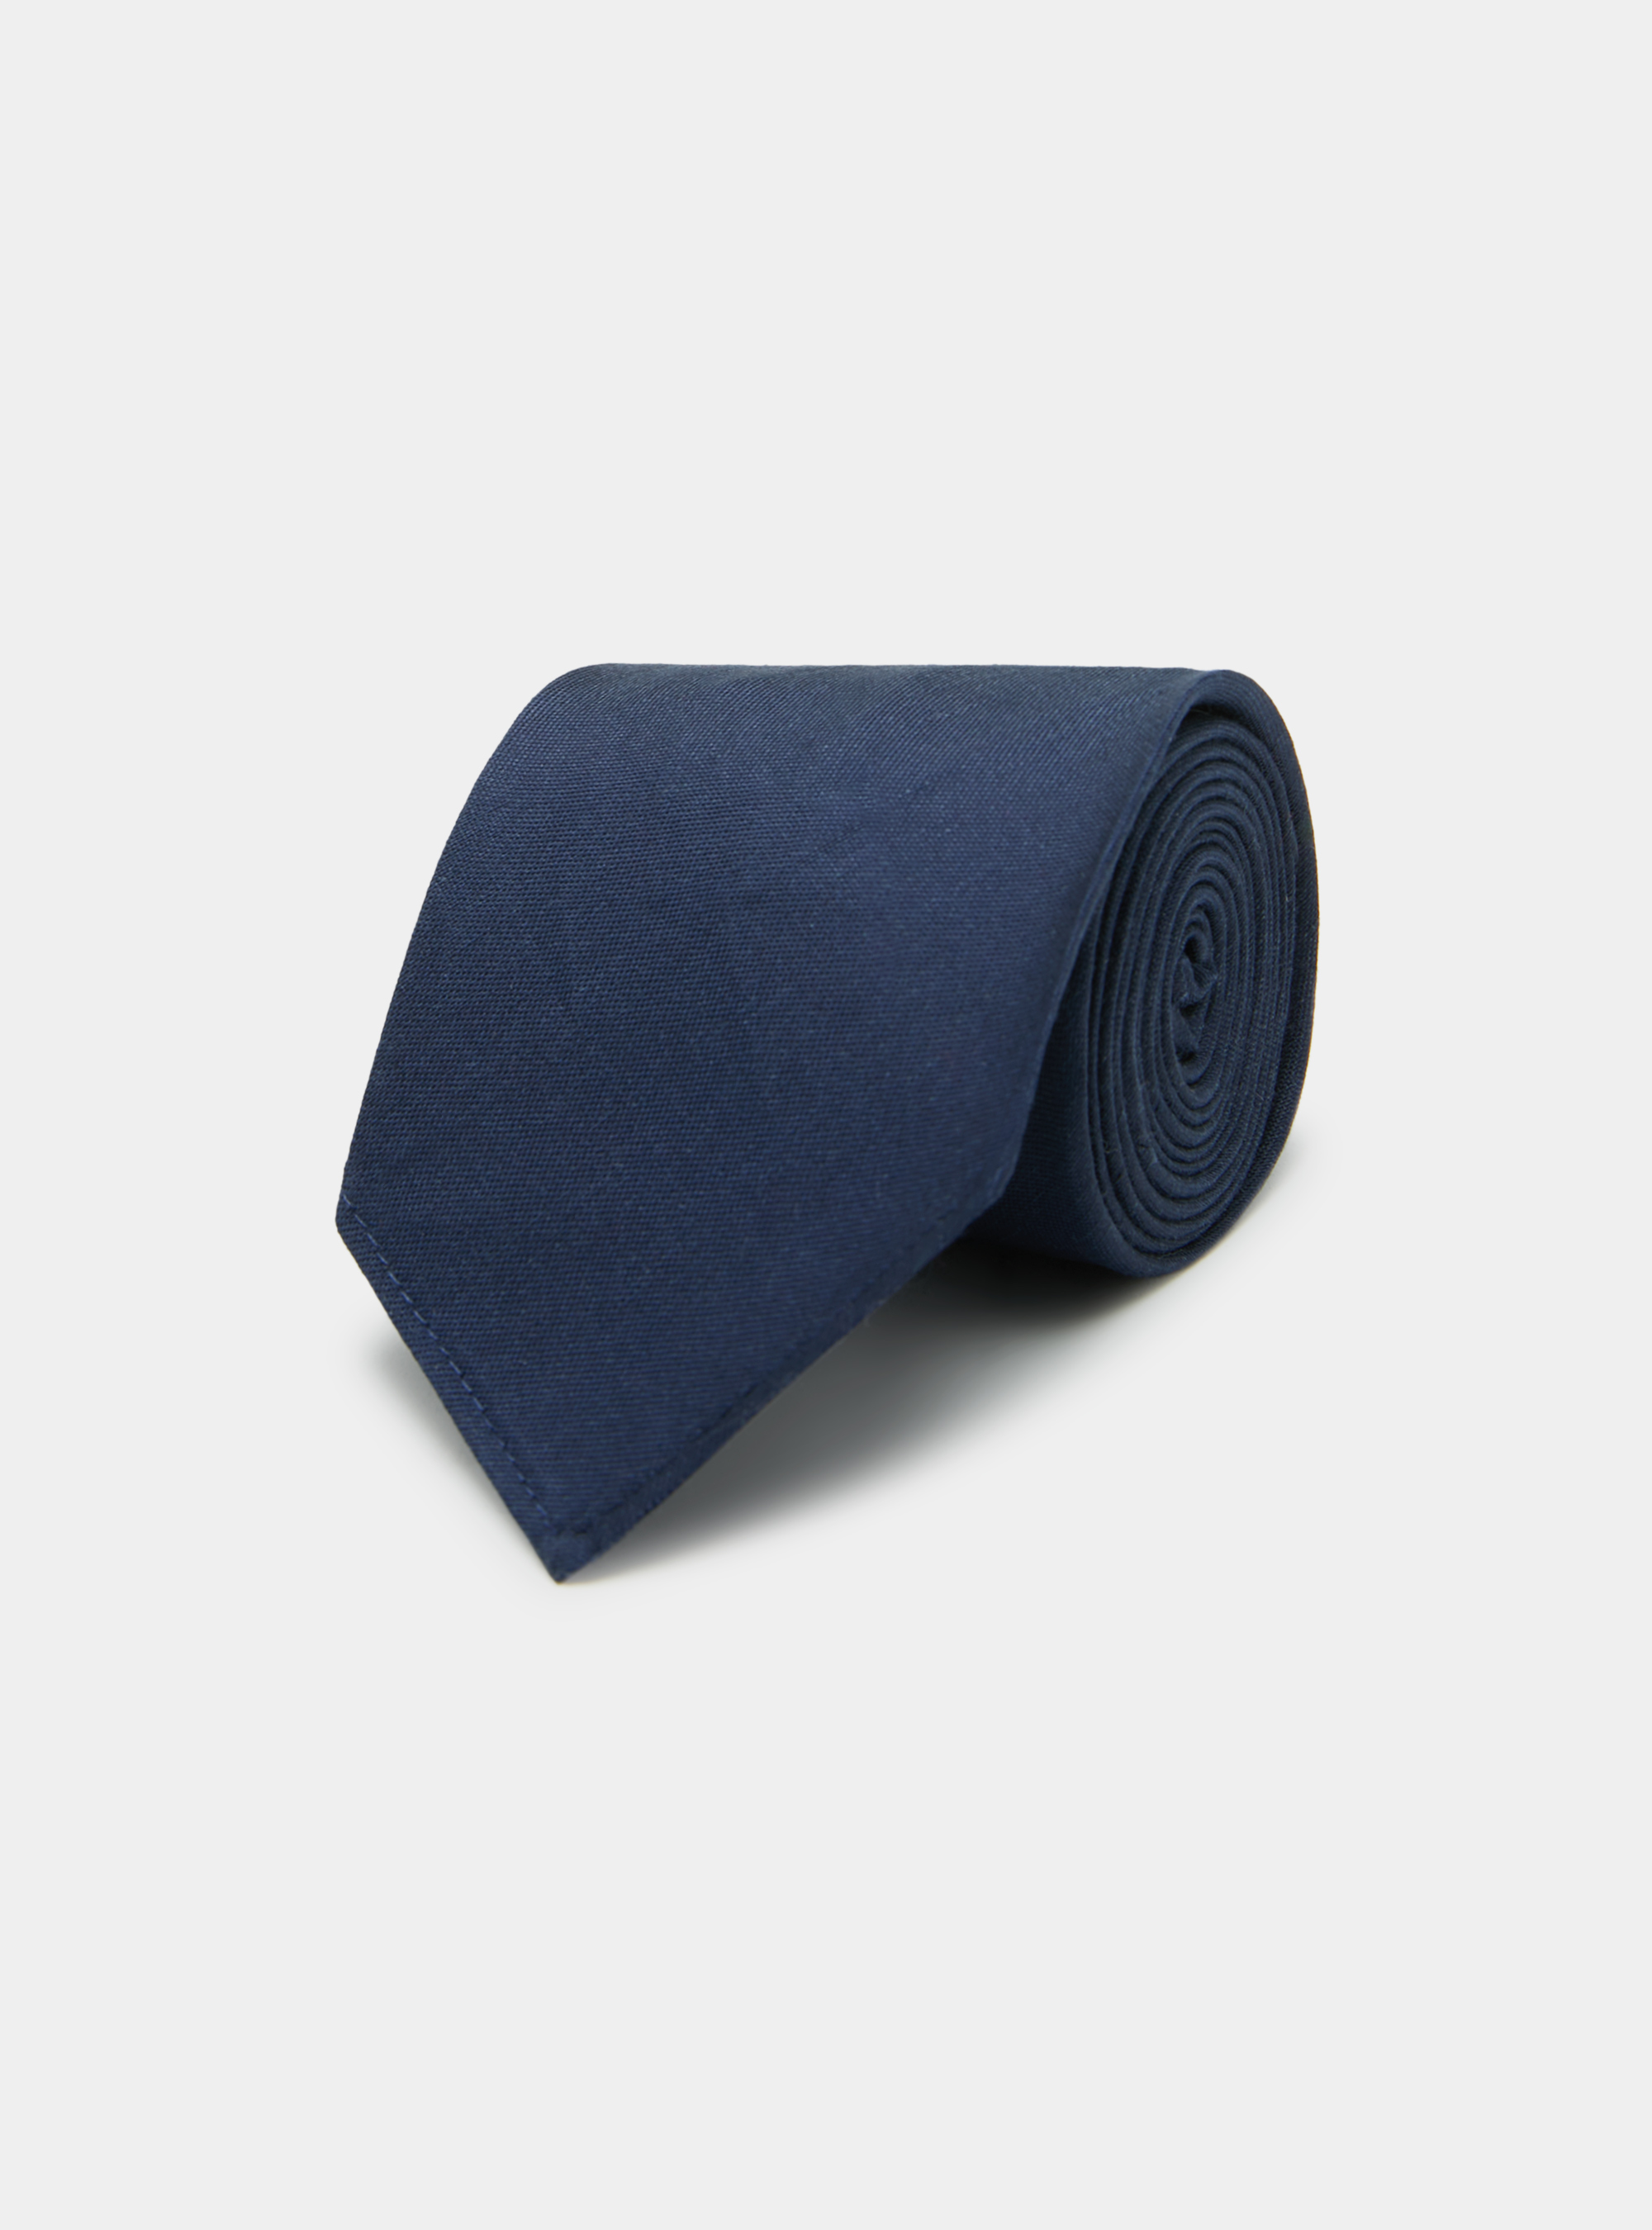 Gutteridge - Cravatta in seta e lino, Unisex, Blu Navy, Taglia: Unica